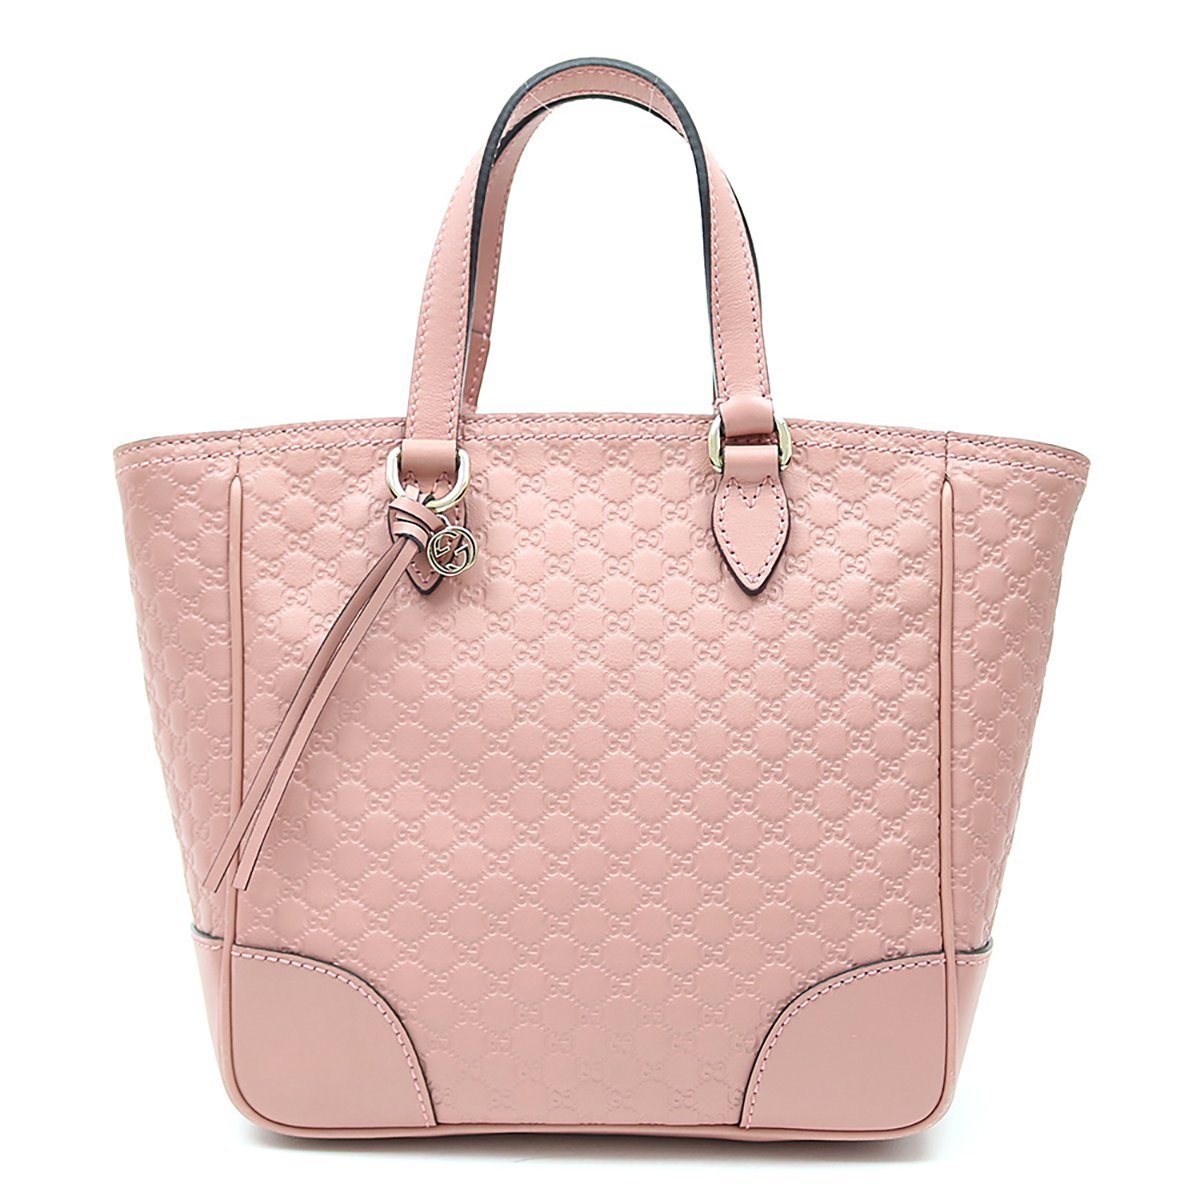 Gucci Womens GG Microguccissima Calf Leather Soft Pink Tote Crossbody Bag 449241 | eBay